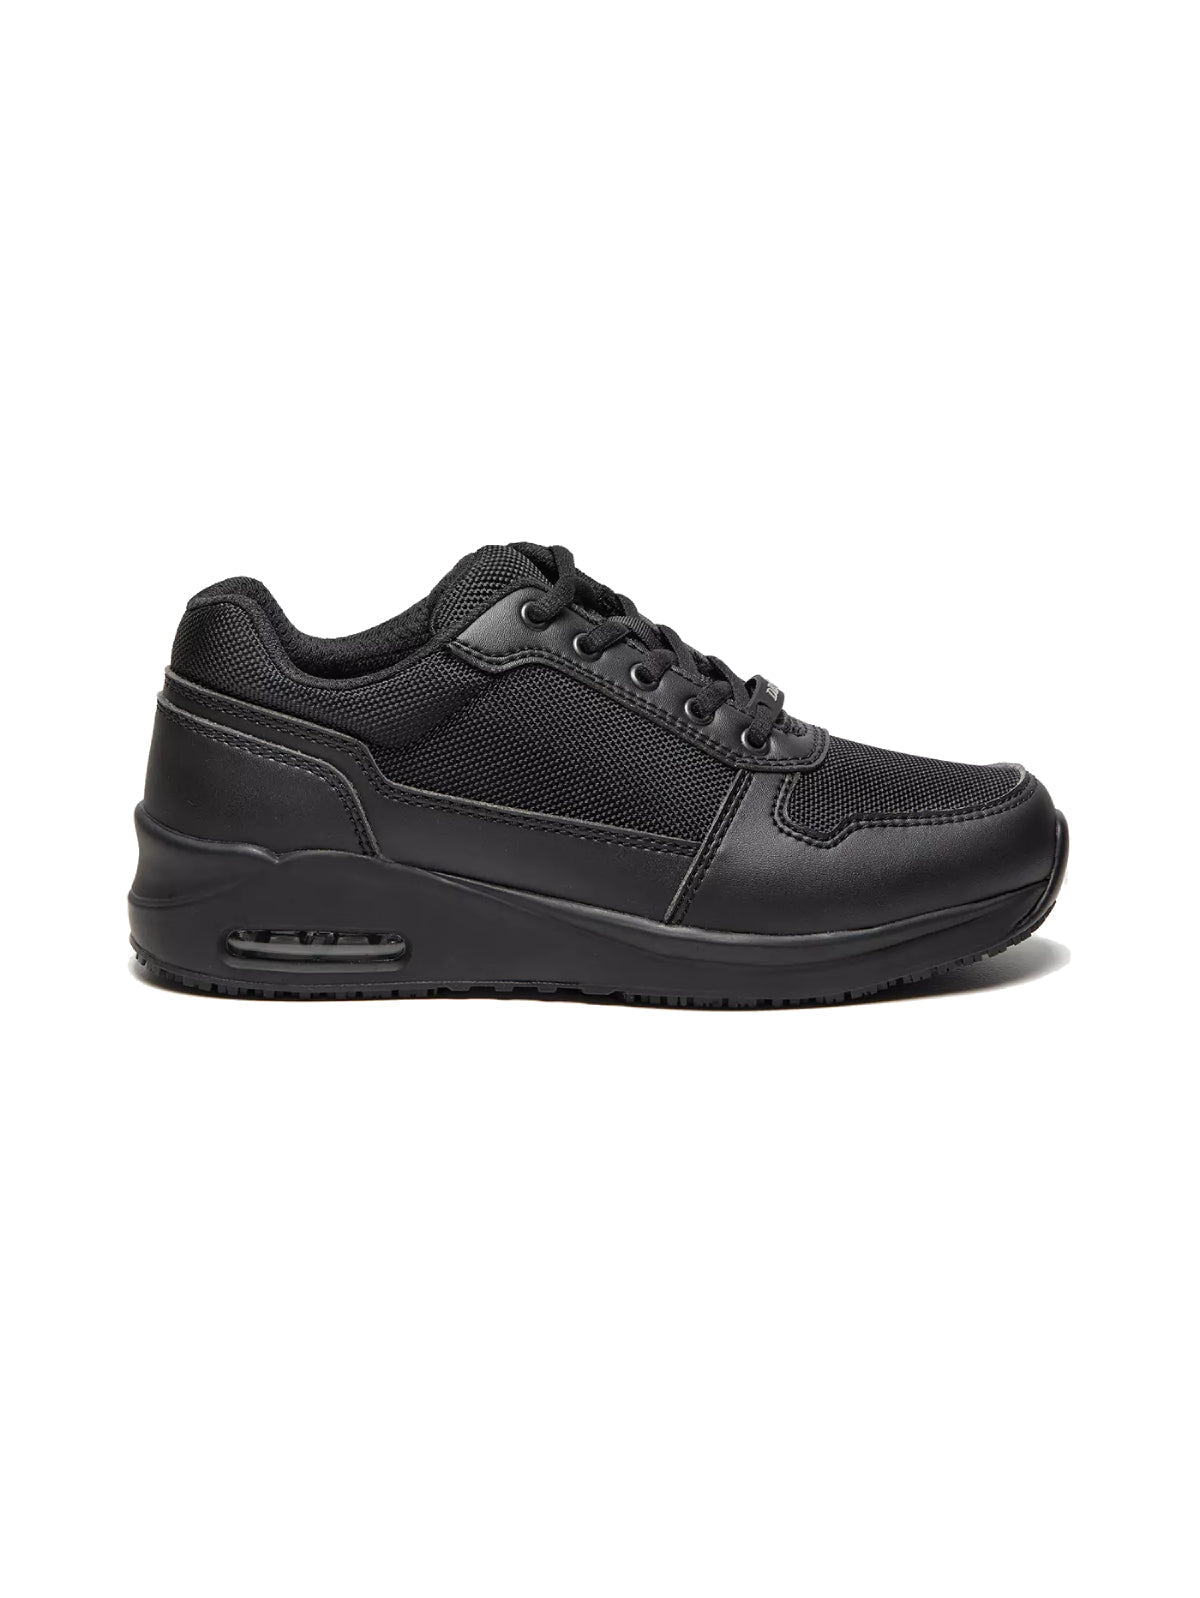 Work Sneaker DB.01 Black by New -  ChefsCotton